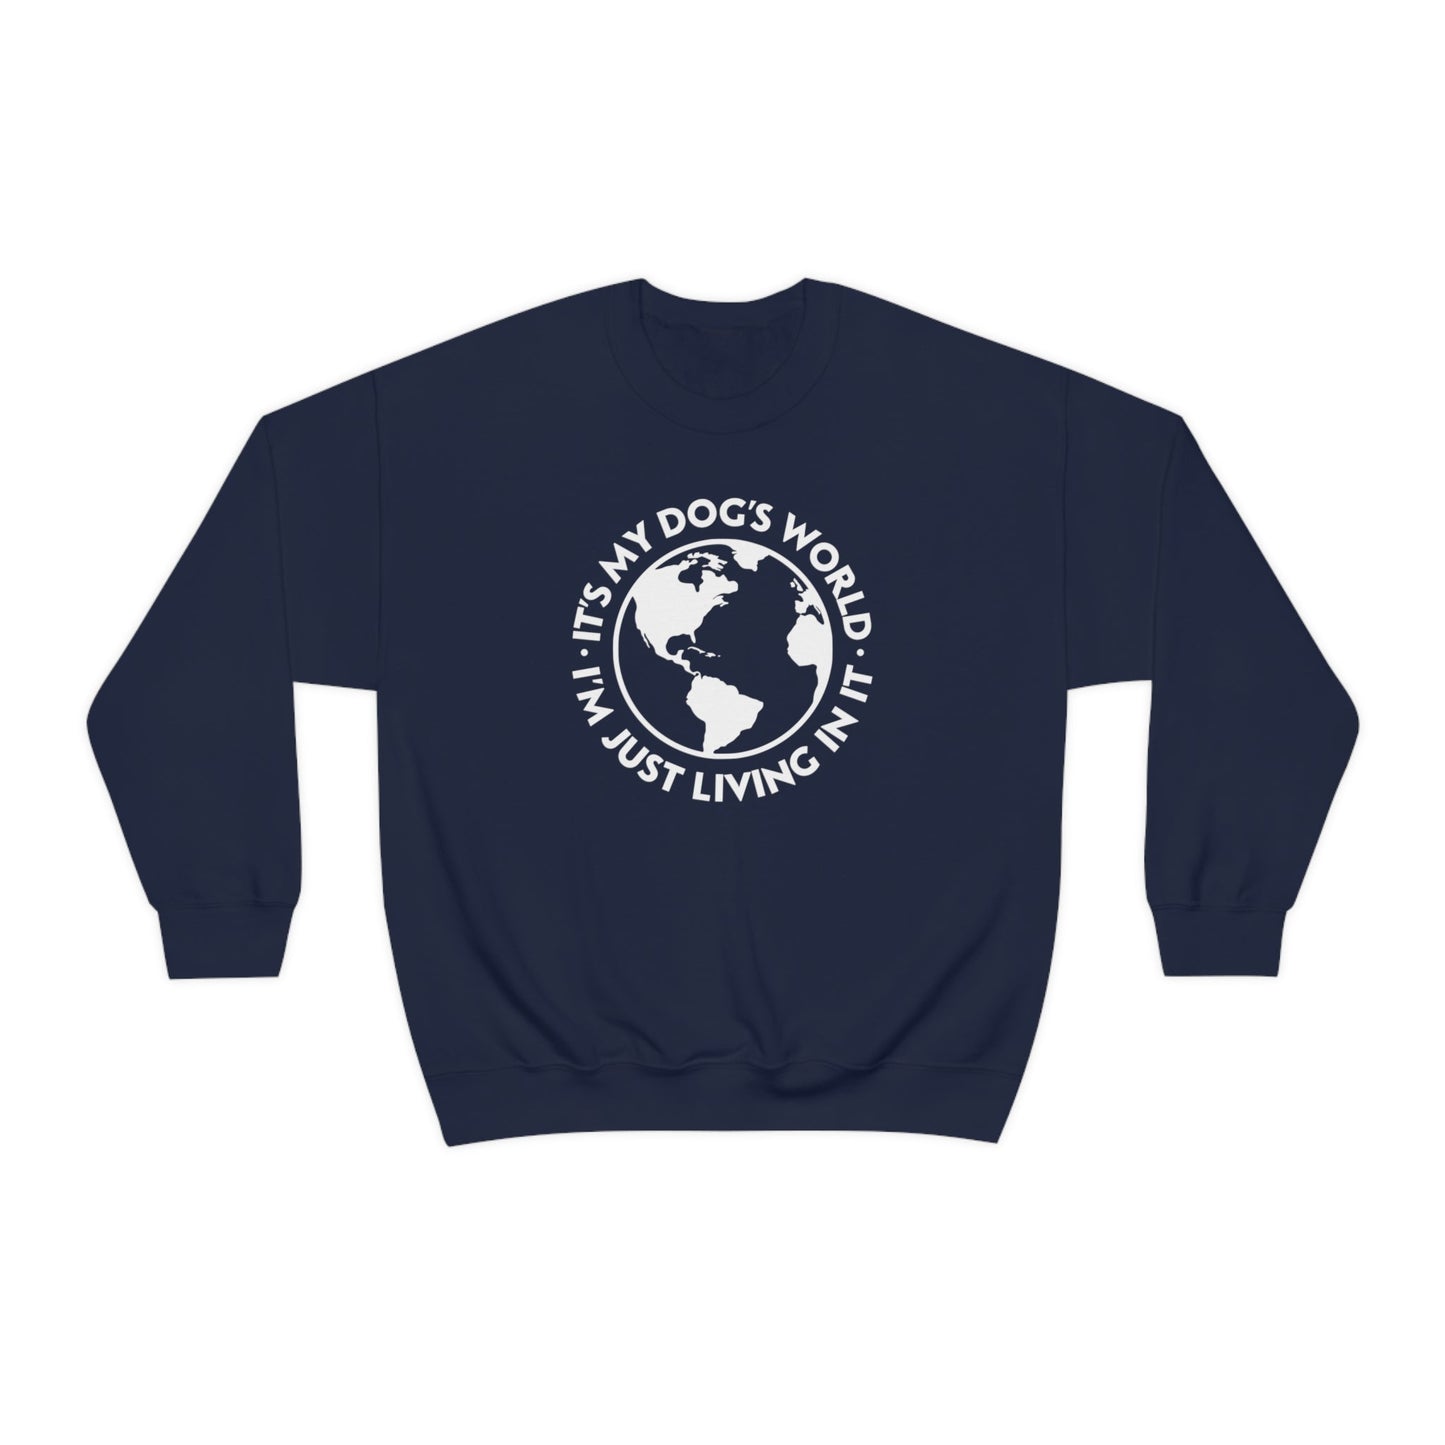 It's My Dog's World | Crewneck Sweatshirt - Detezi Designs-27700392020857771081